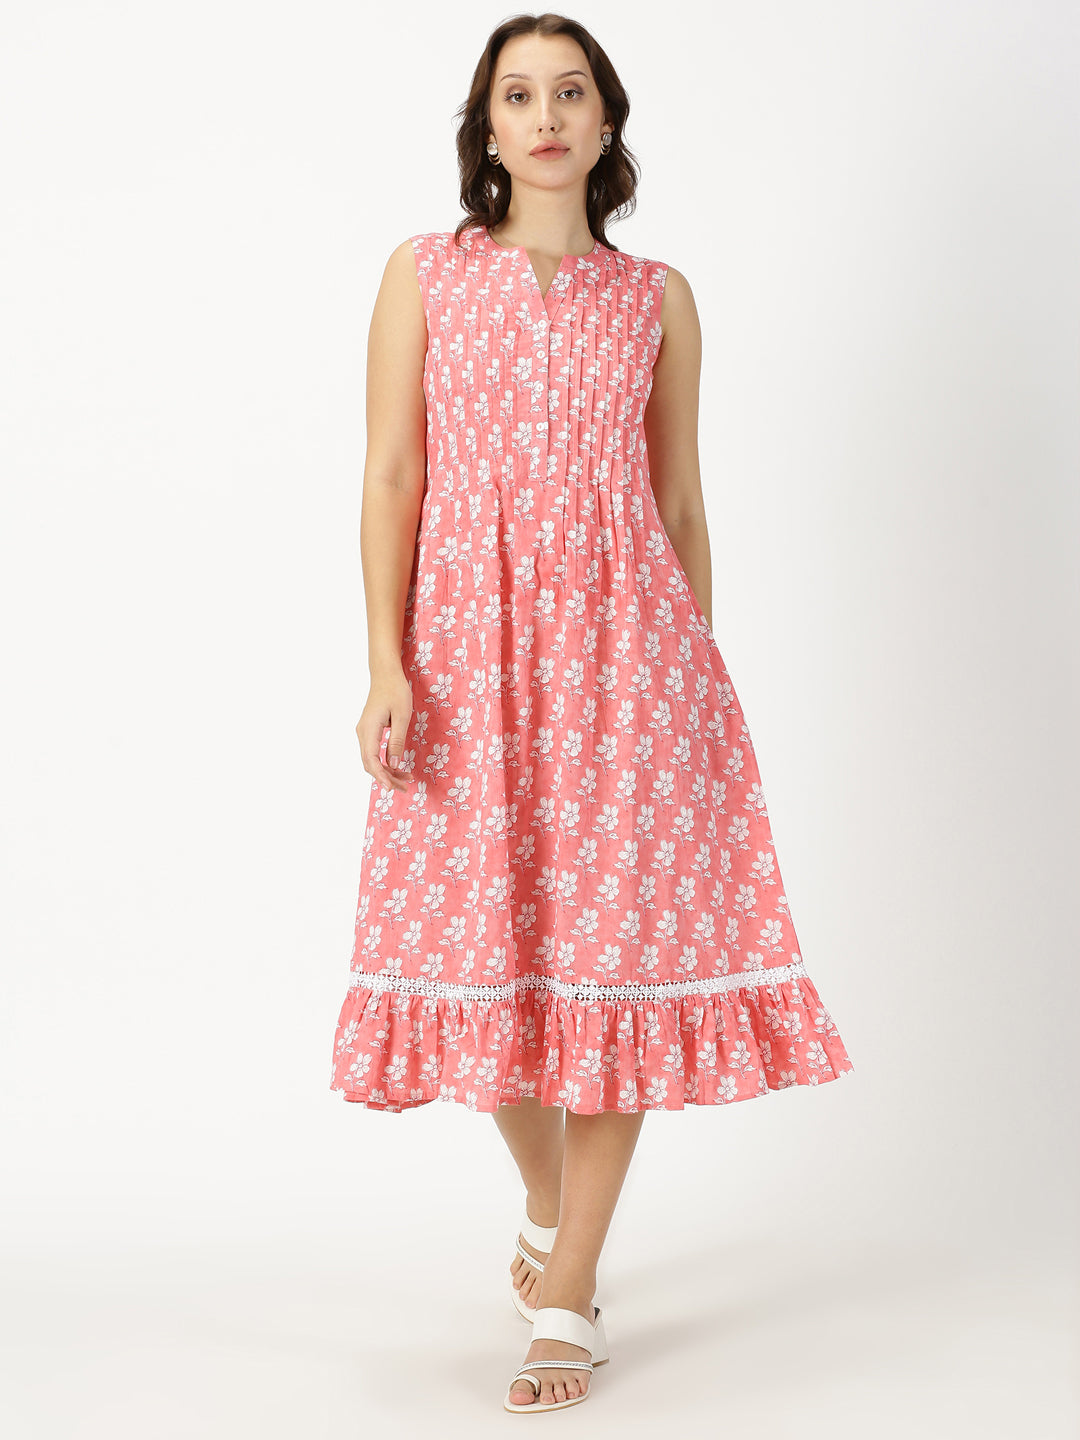 NEW Stylish Women Long Sleeves Colorful Print Buttons Club Short Shirt Dress  | eBay